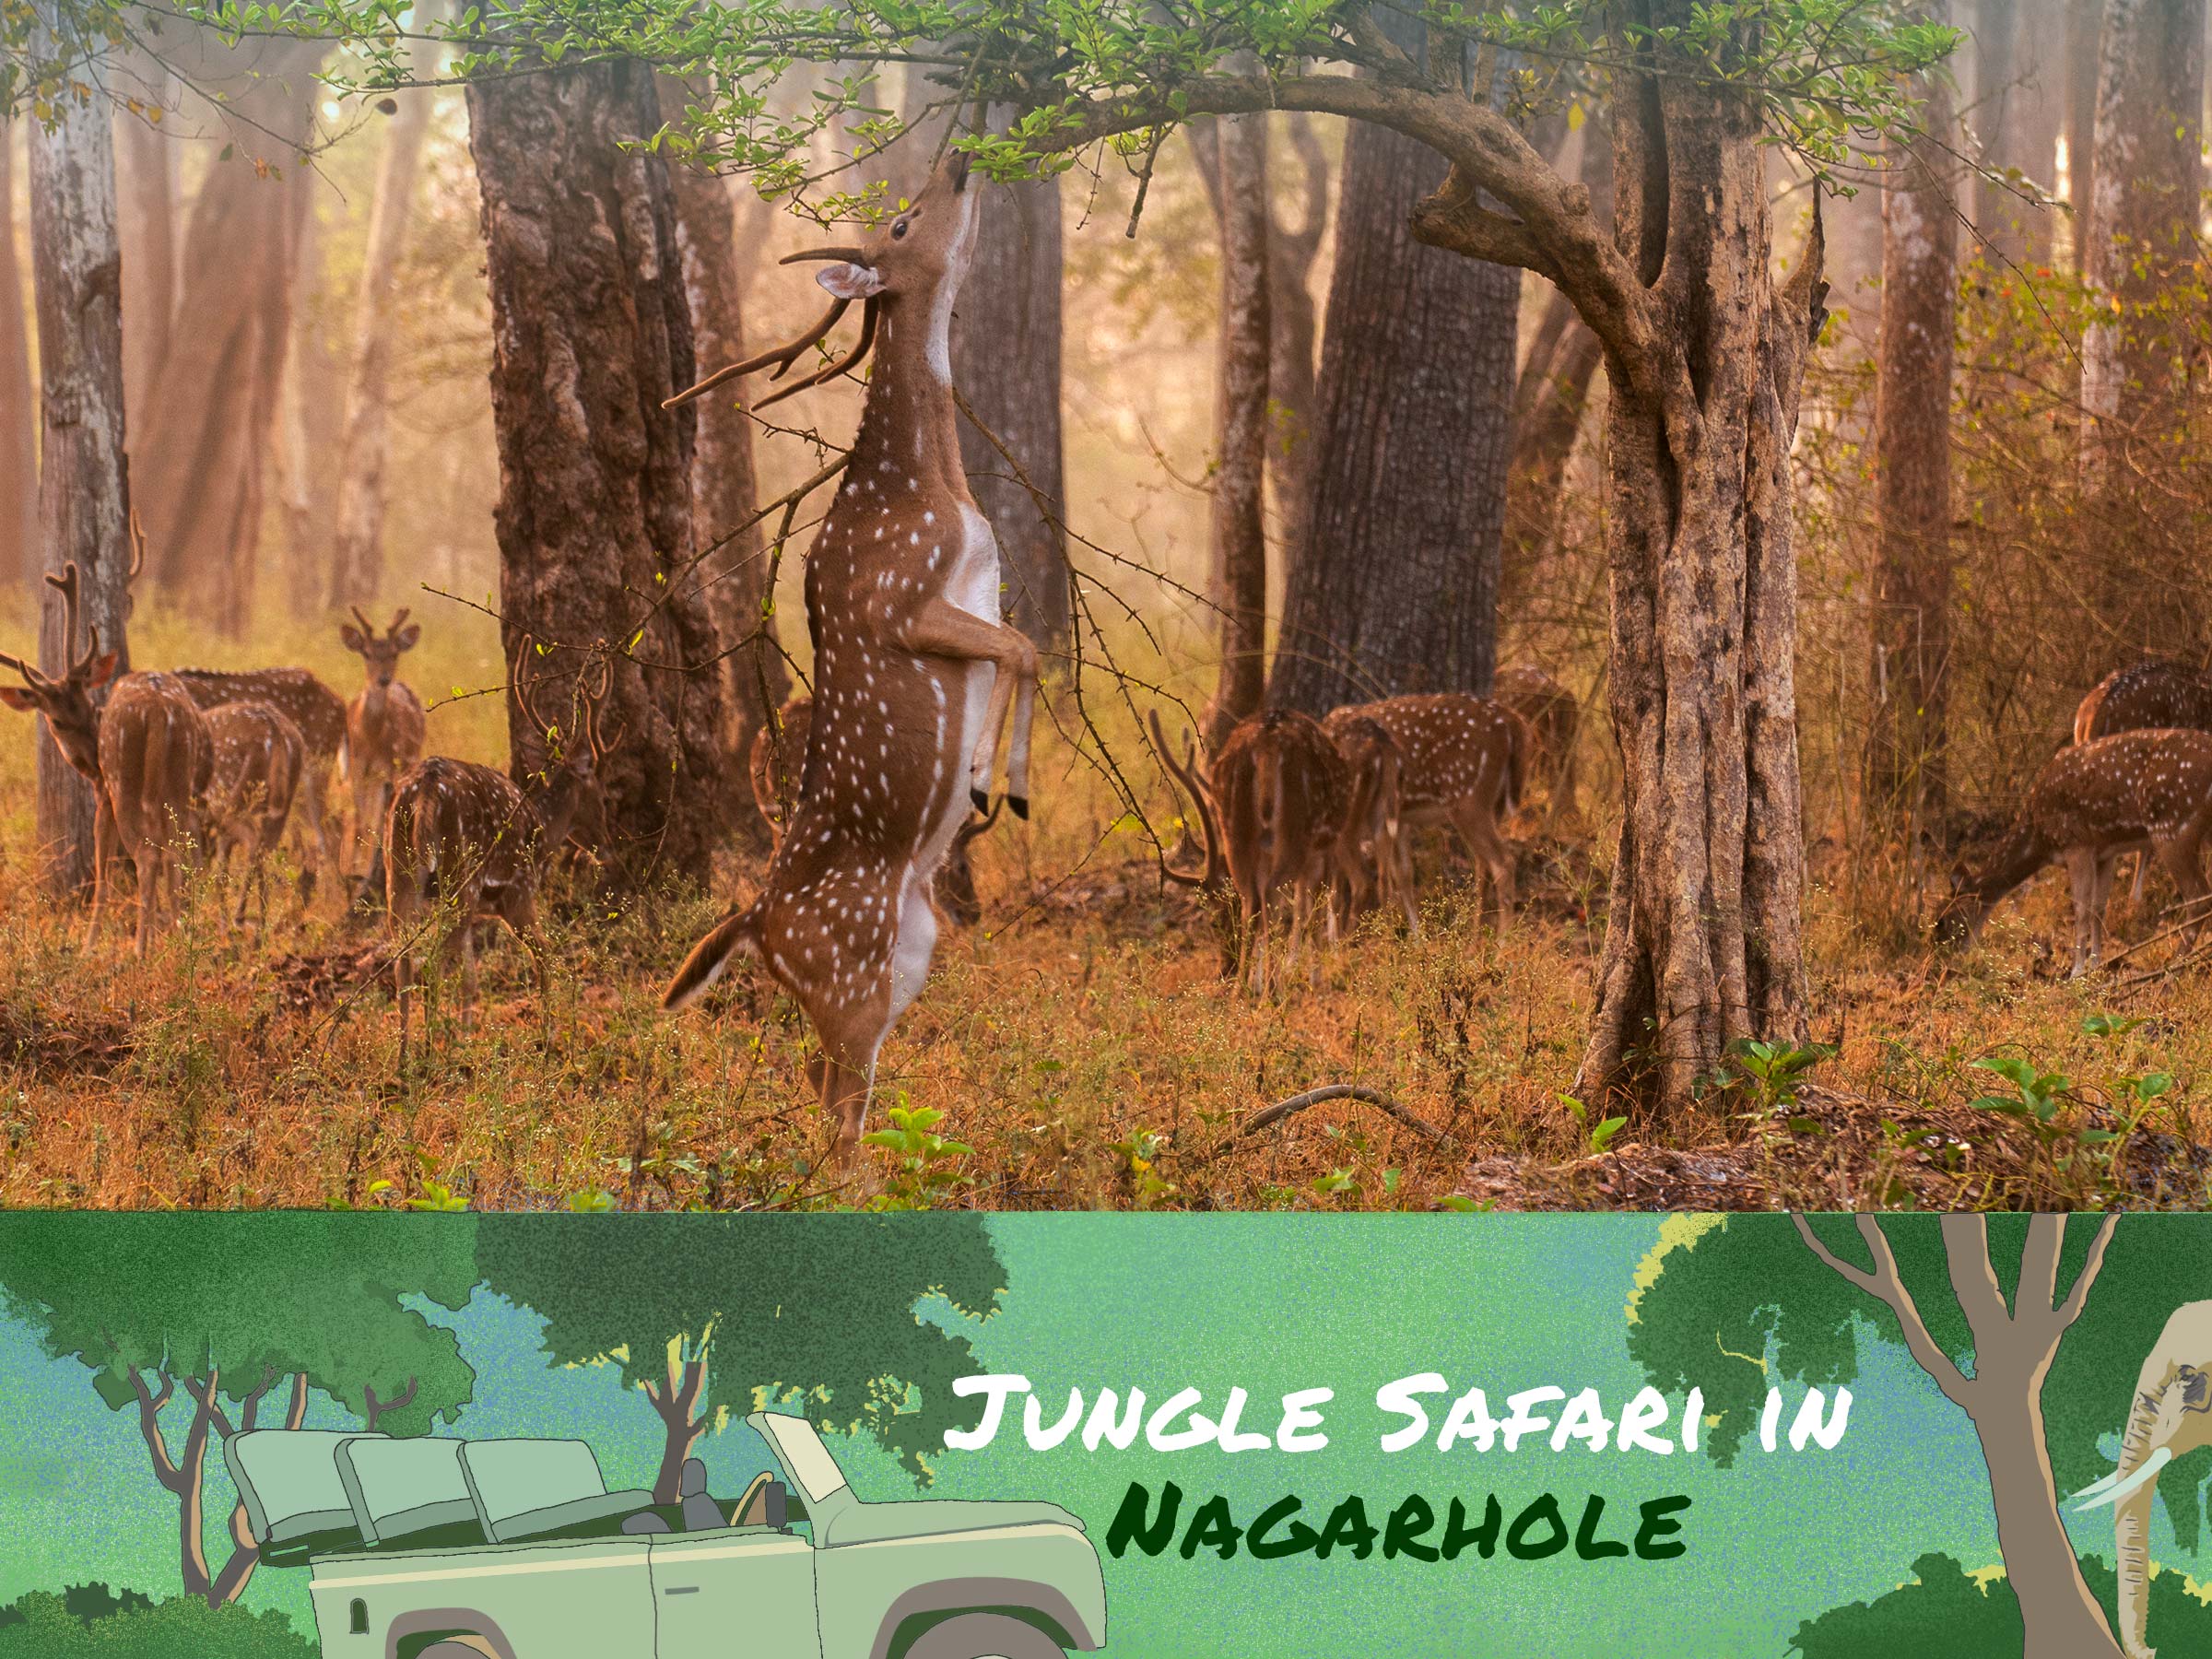 nagarhole jungle safari